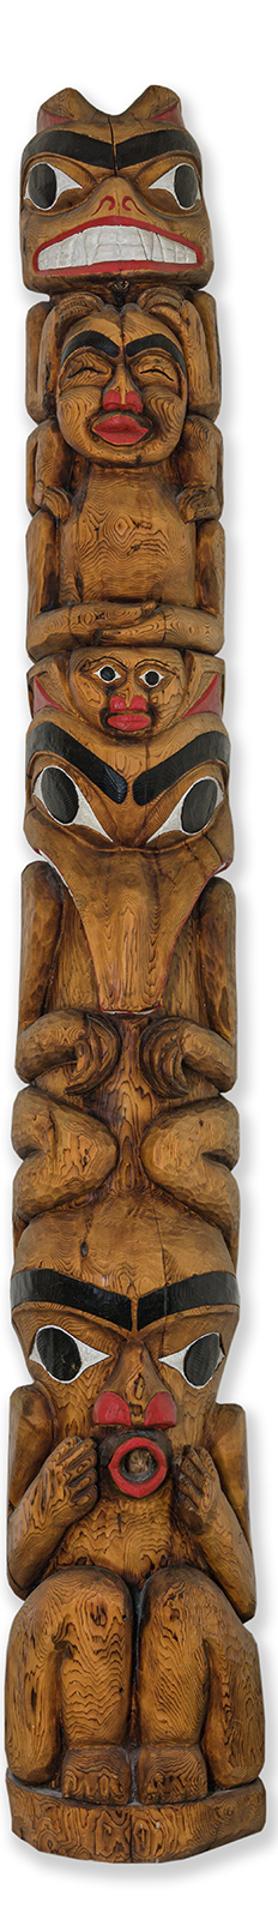 Bill Bouchard - Pacific Northwest Coast Style Totem